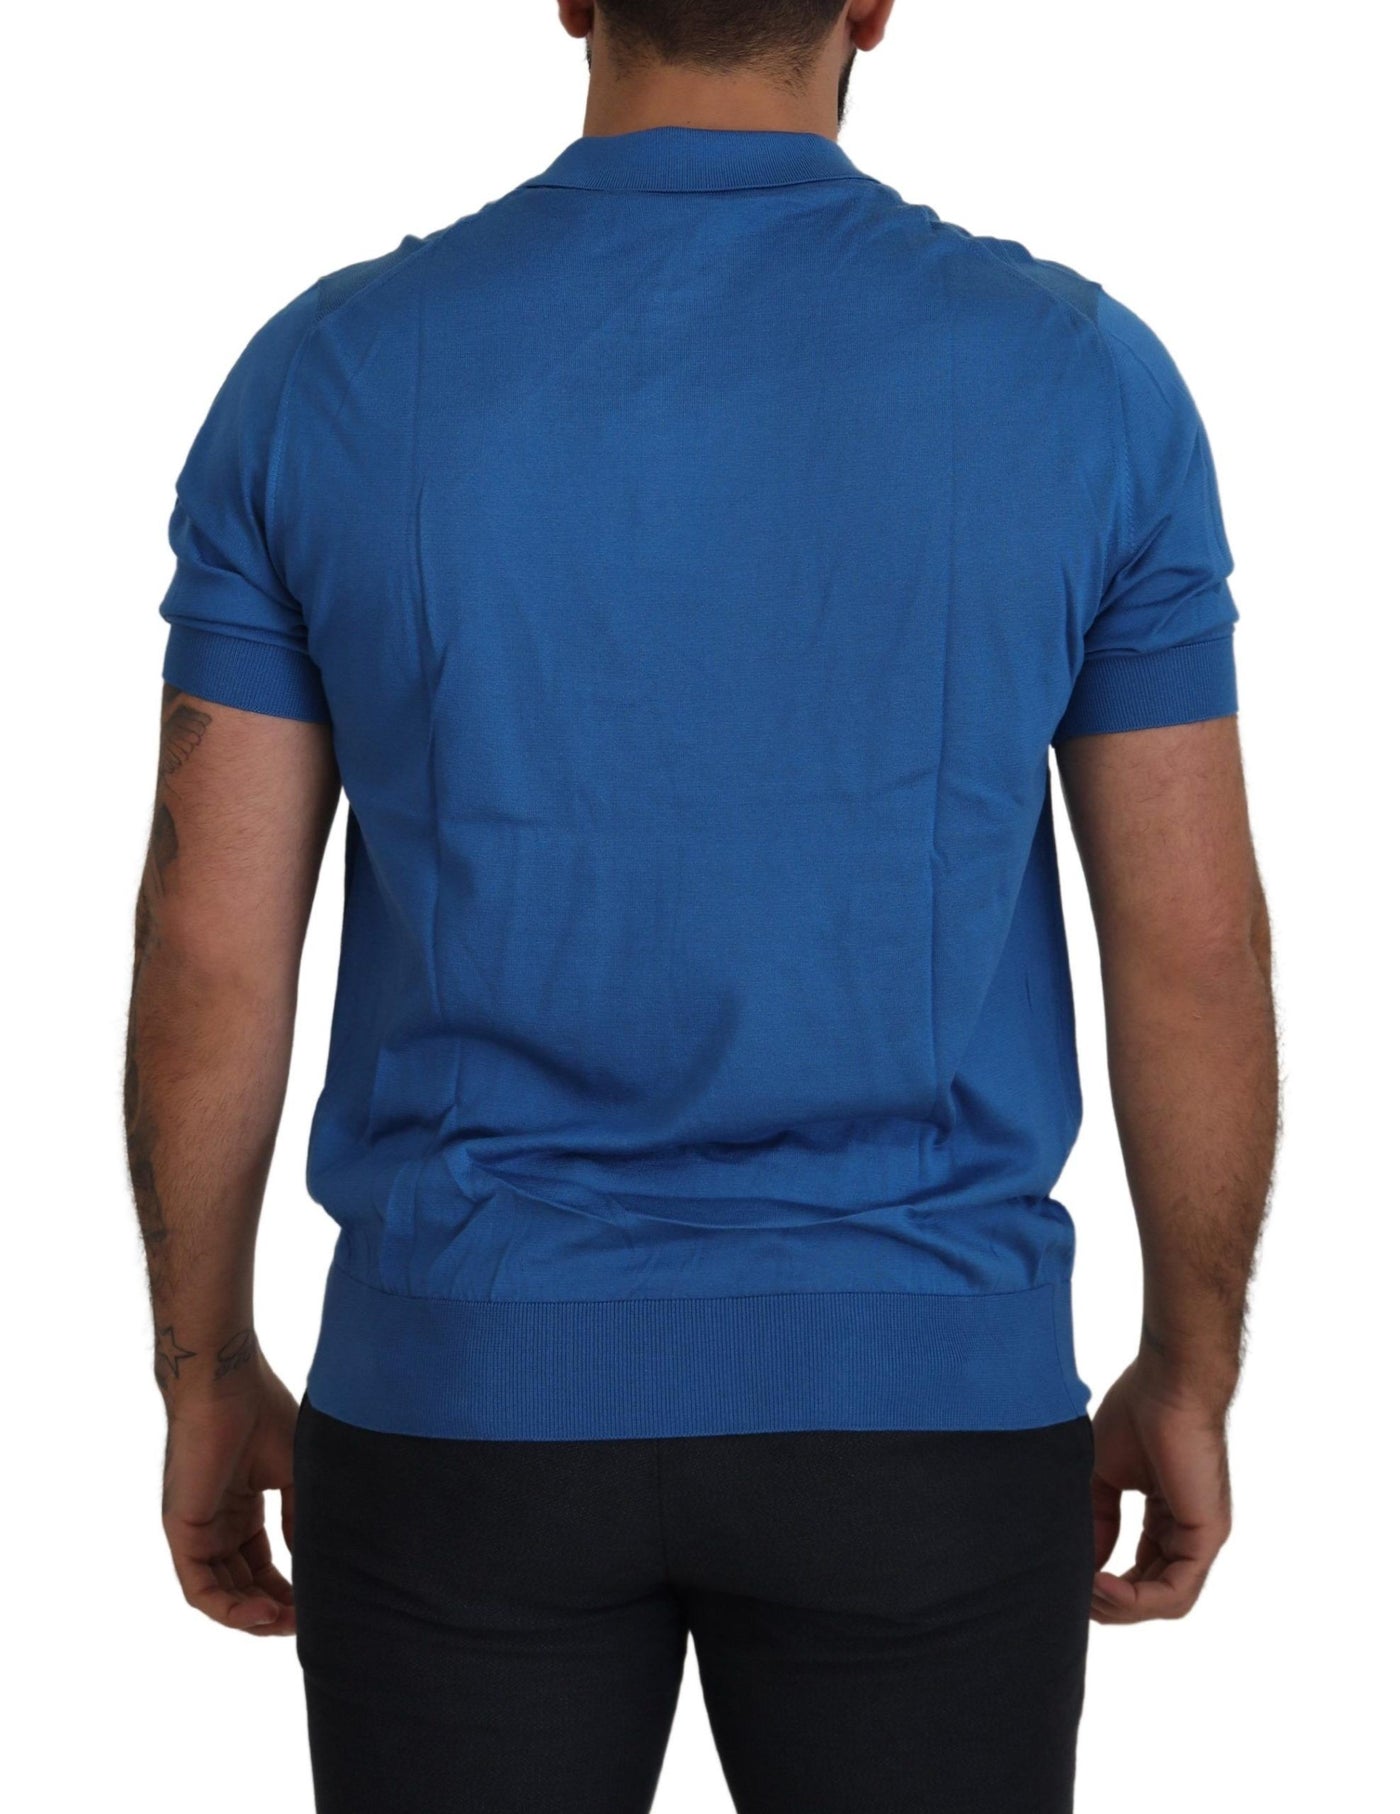 Blue Silk Short Sleeve Collared Polo T-shirt